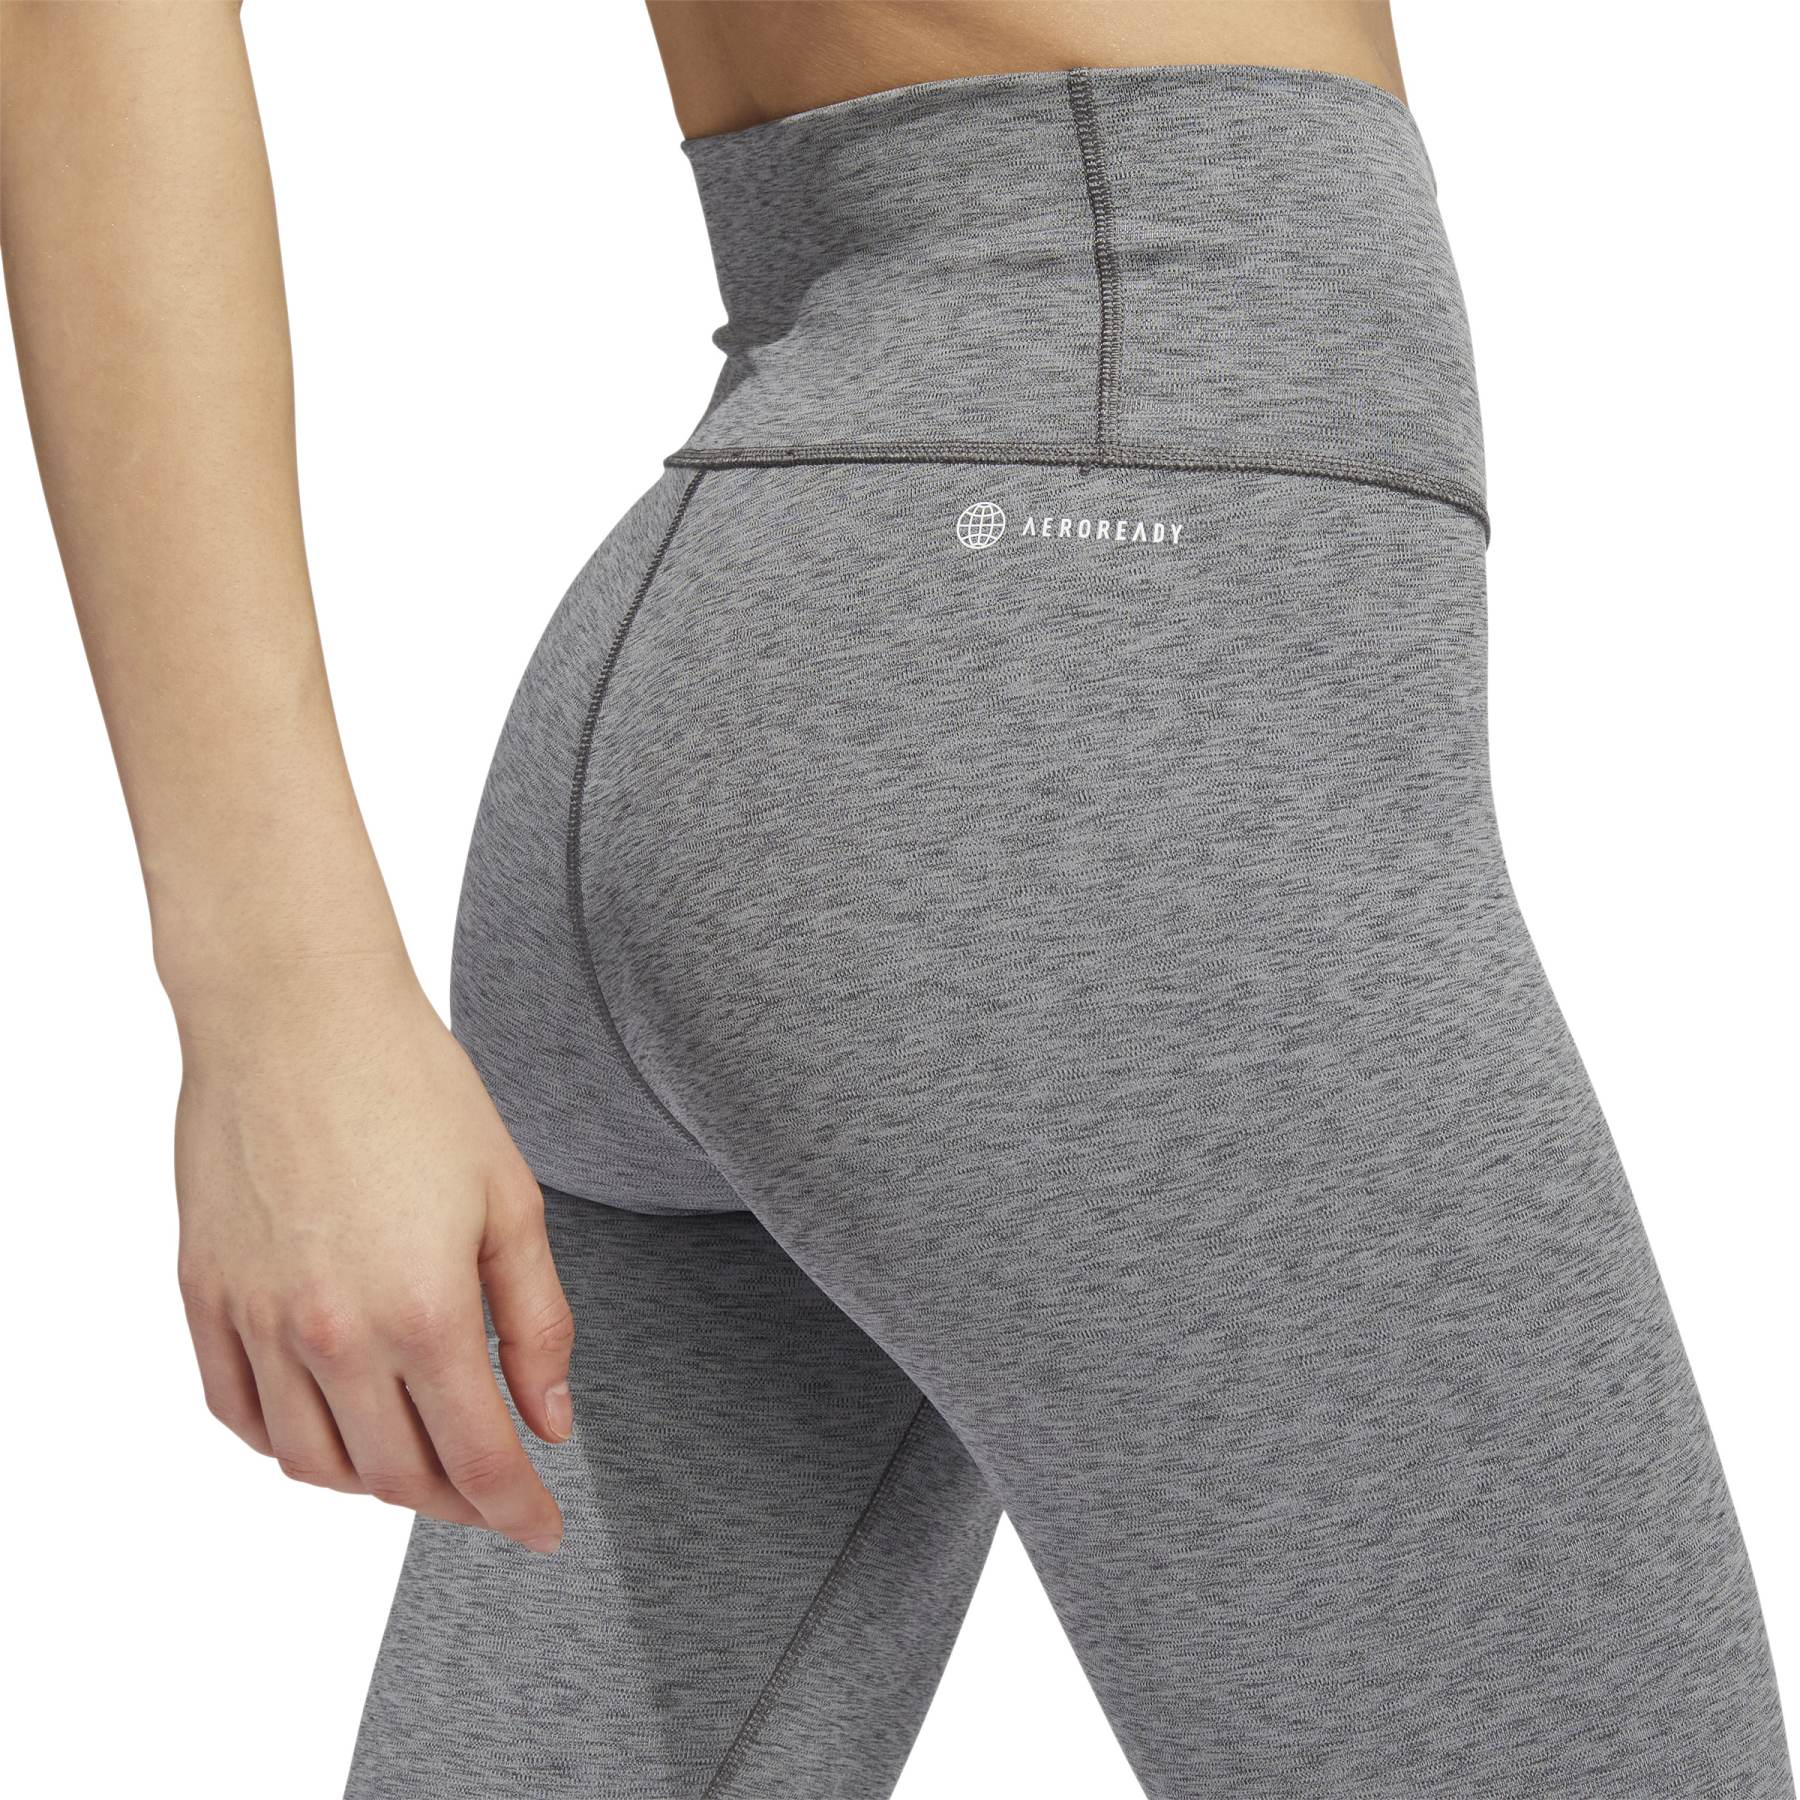 Adidas Techfit leggings yoga pants women's M grey and… - Gem